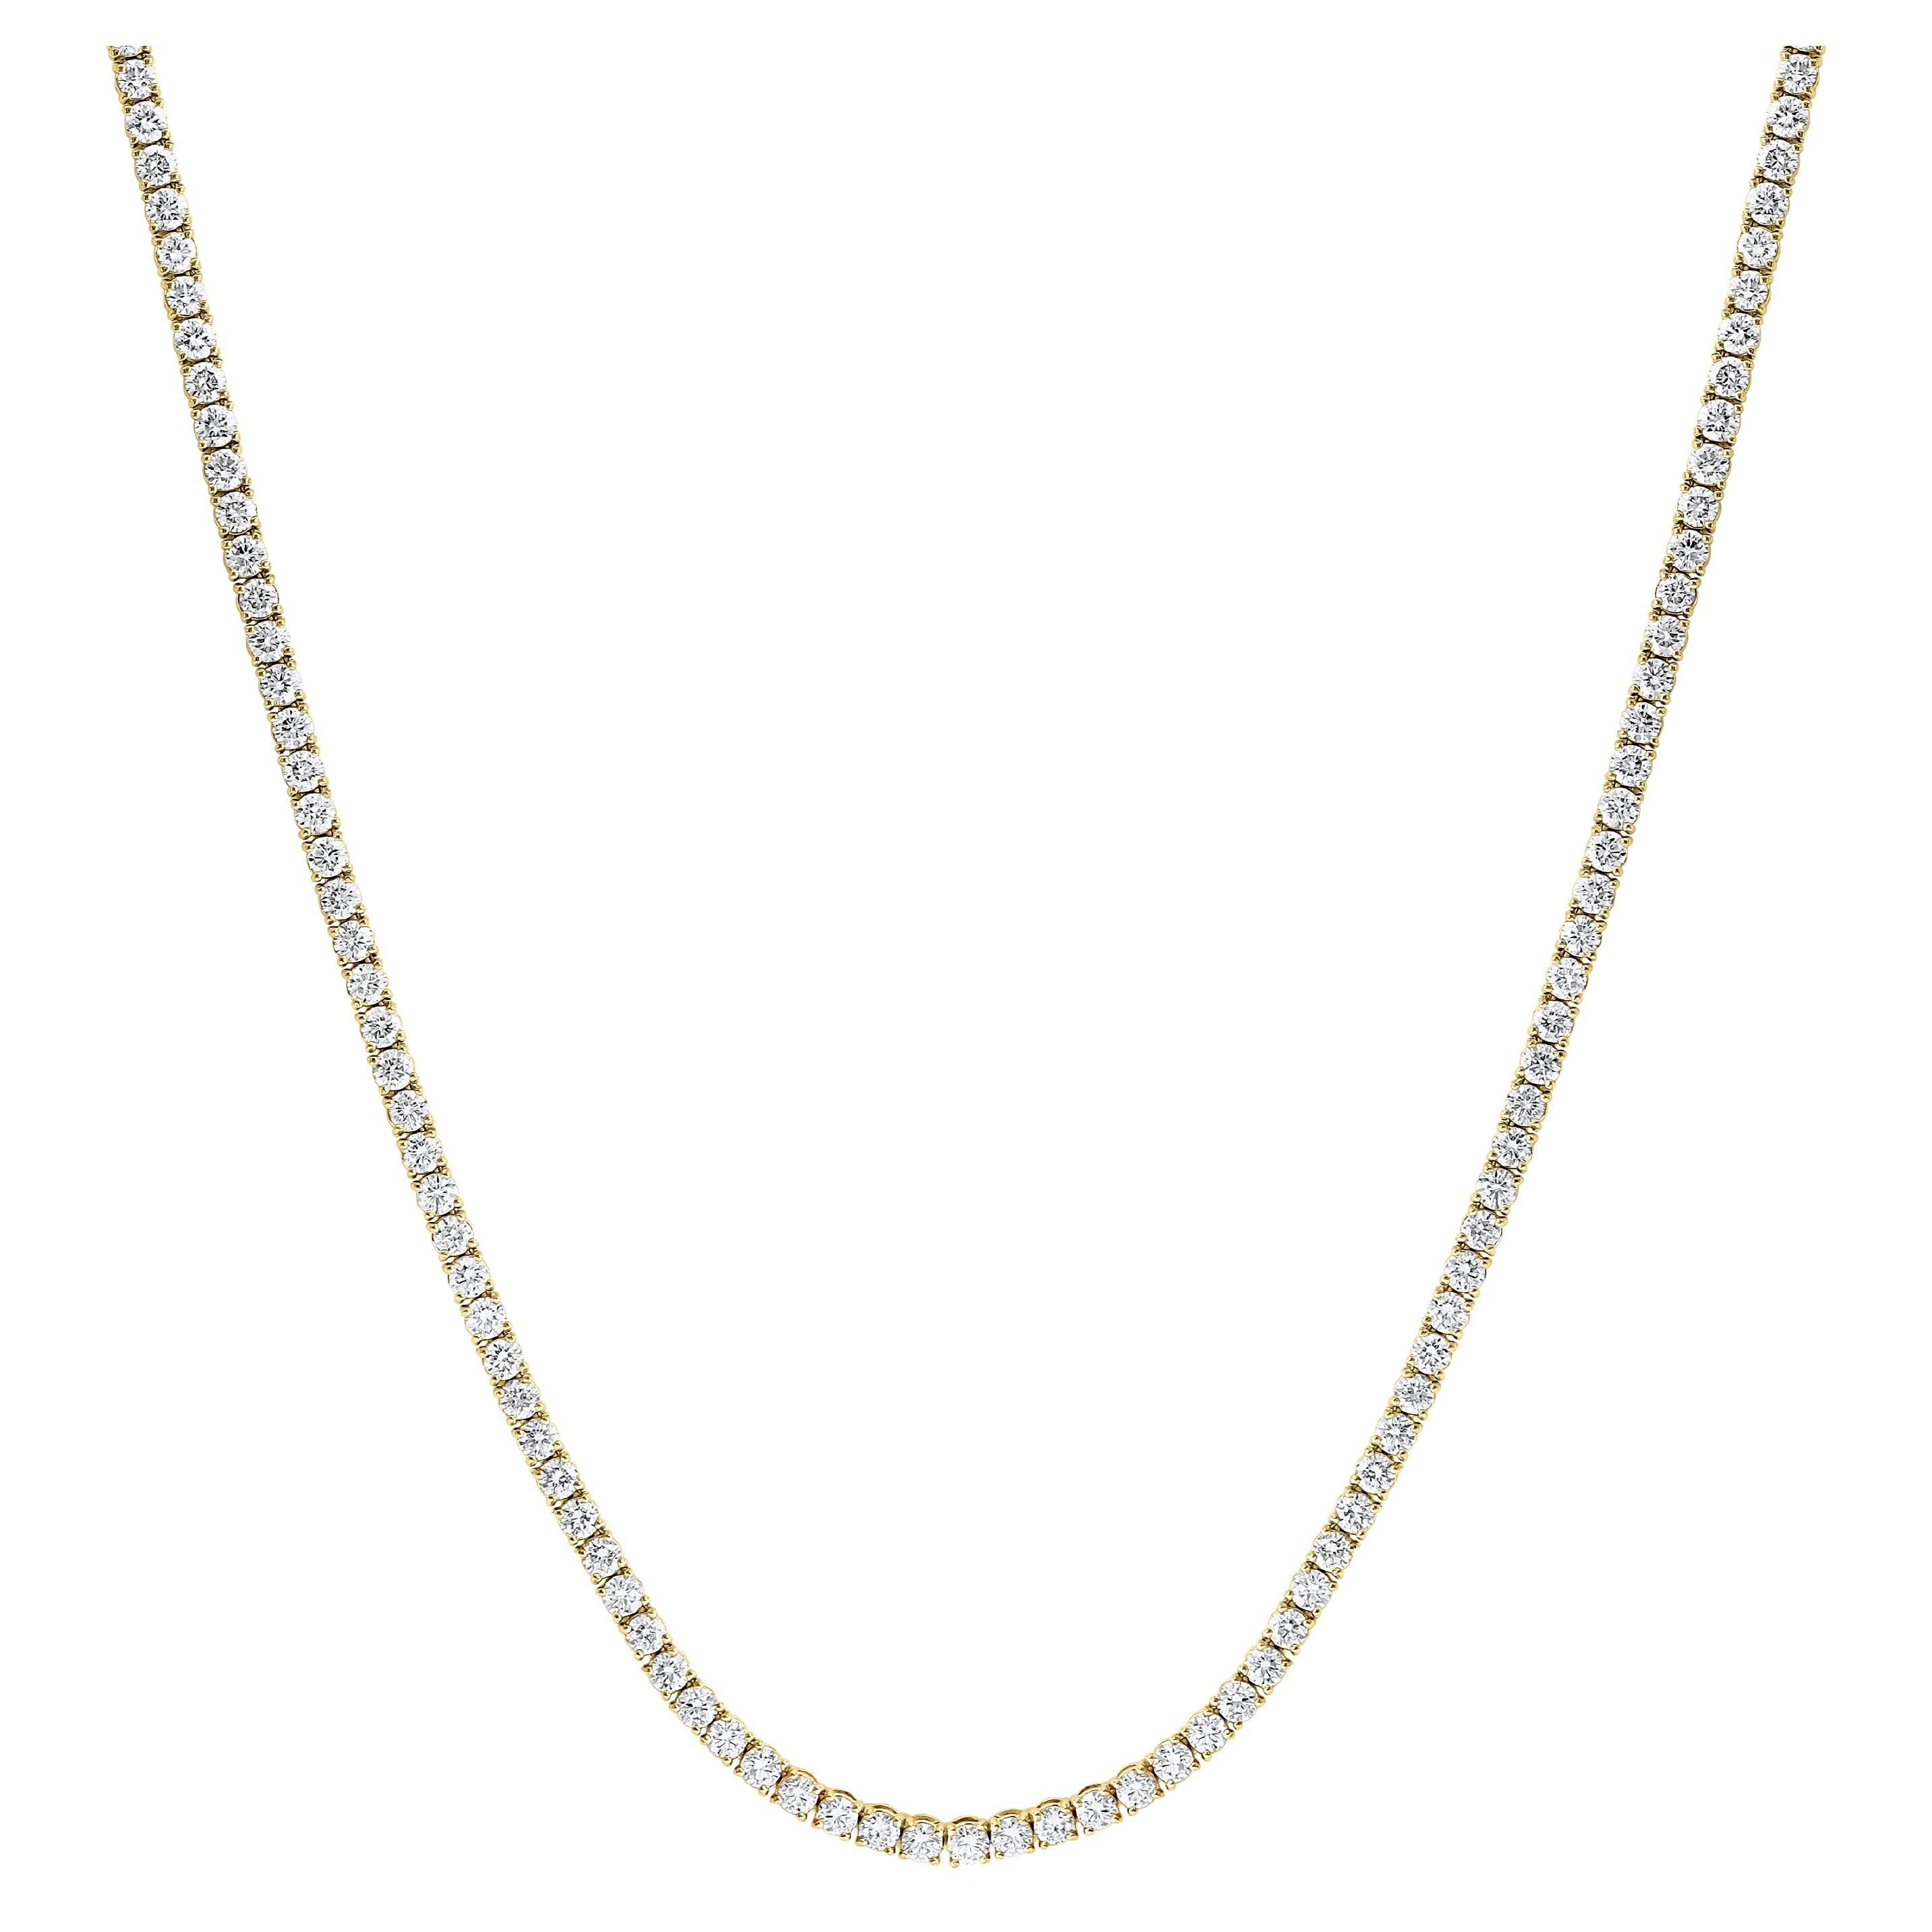 8.37 Carat Diamond Tennis Necklace in 14K Yellow Gold